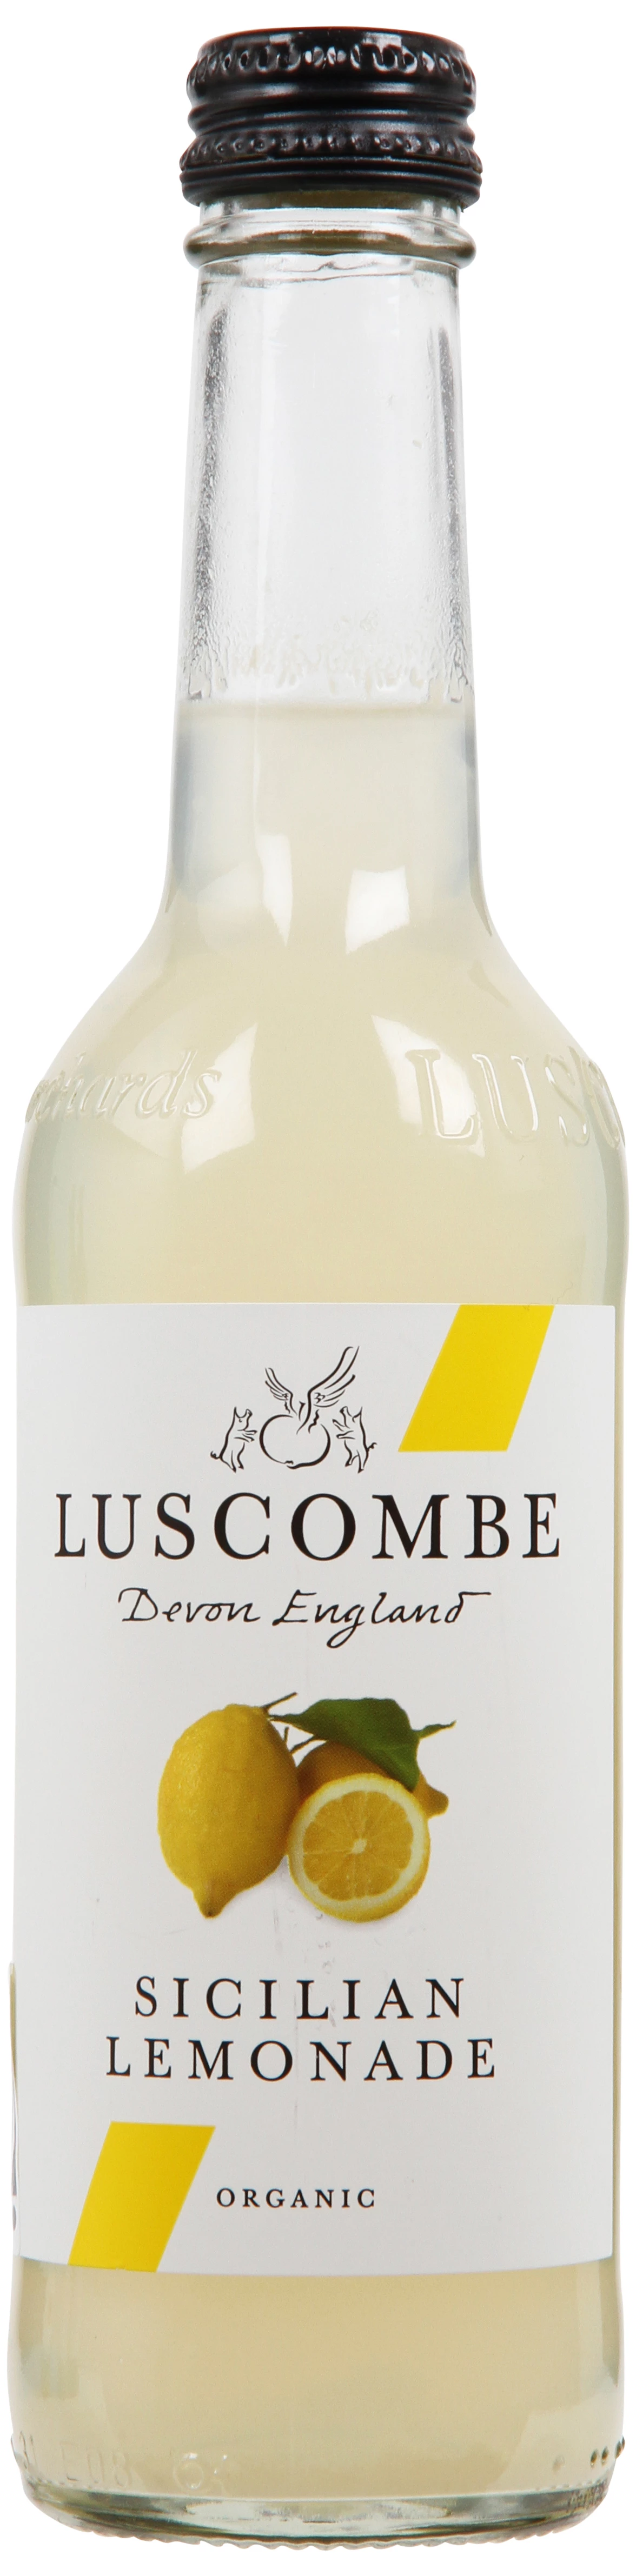 Løgismose Soft drinks Luscombe Siciliansk Limonade ØKO 27cl - 212068